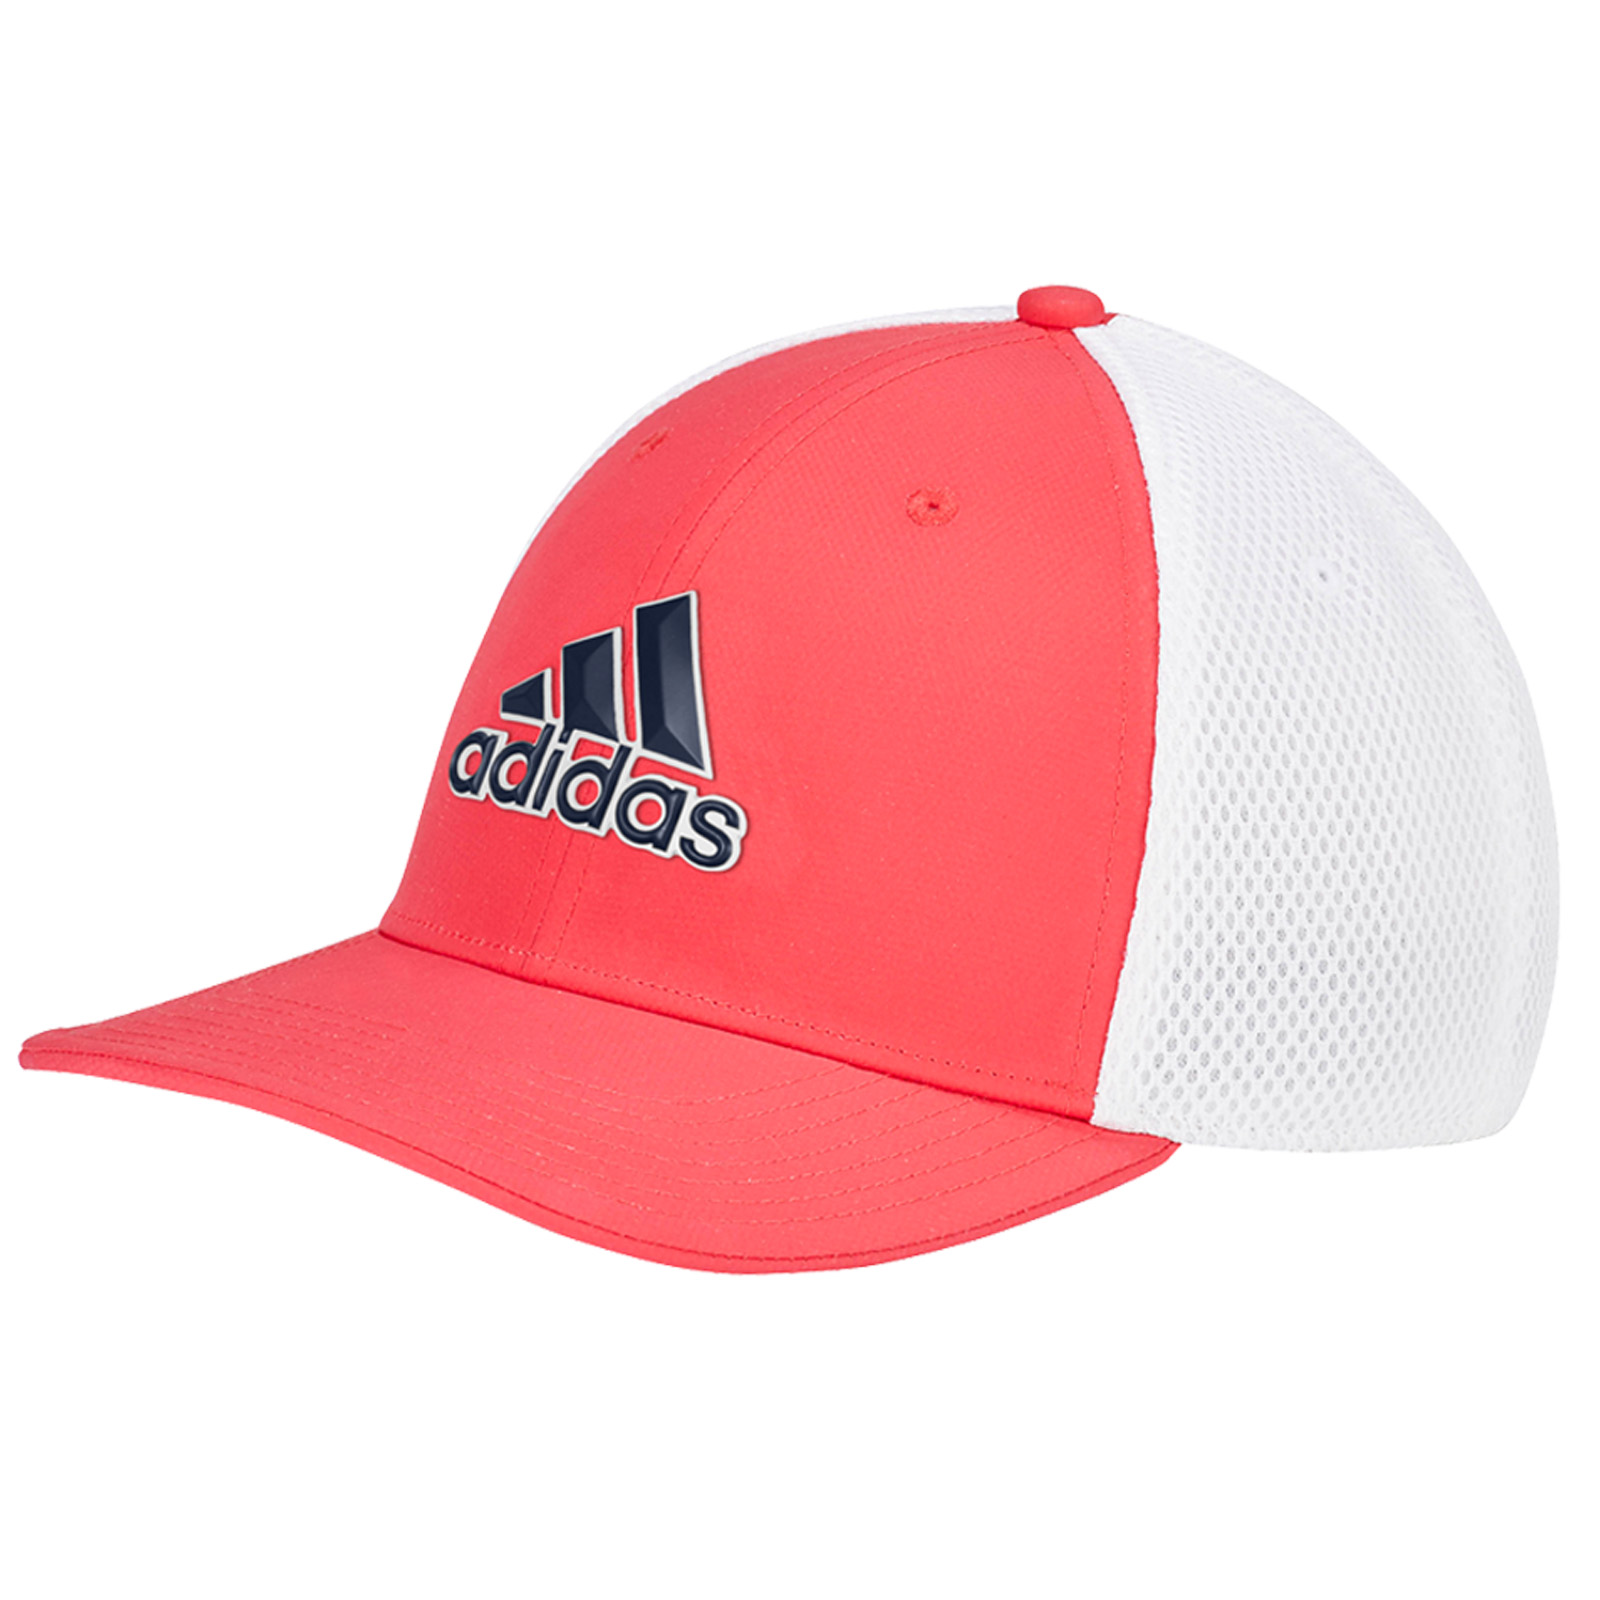 adidas 2015 men's fitted tour mesh golf cap